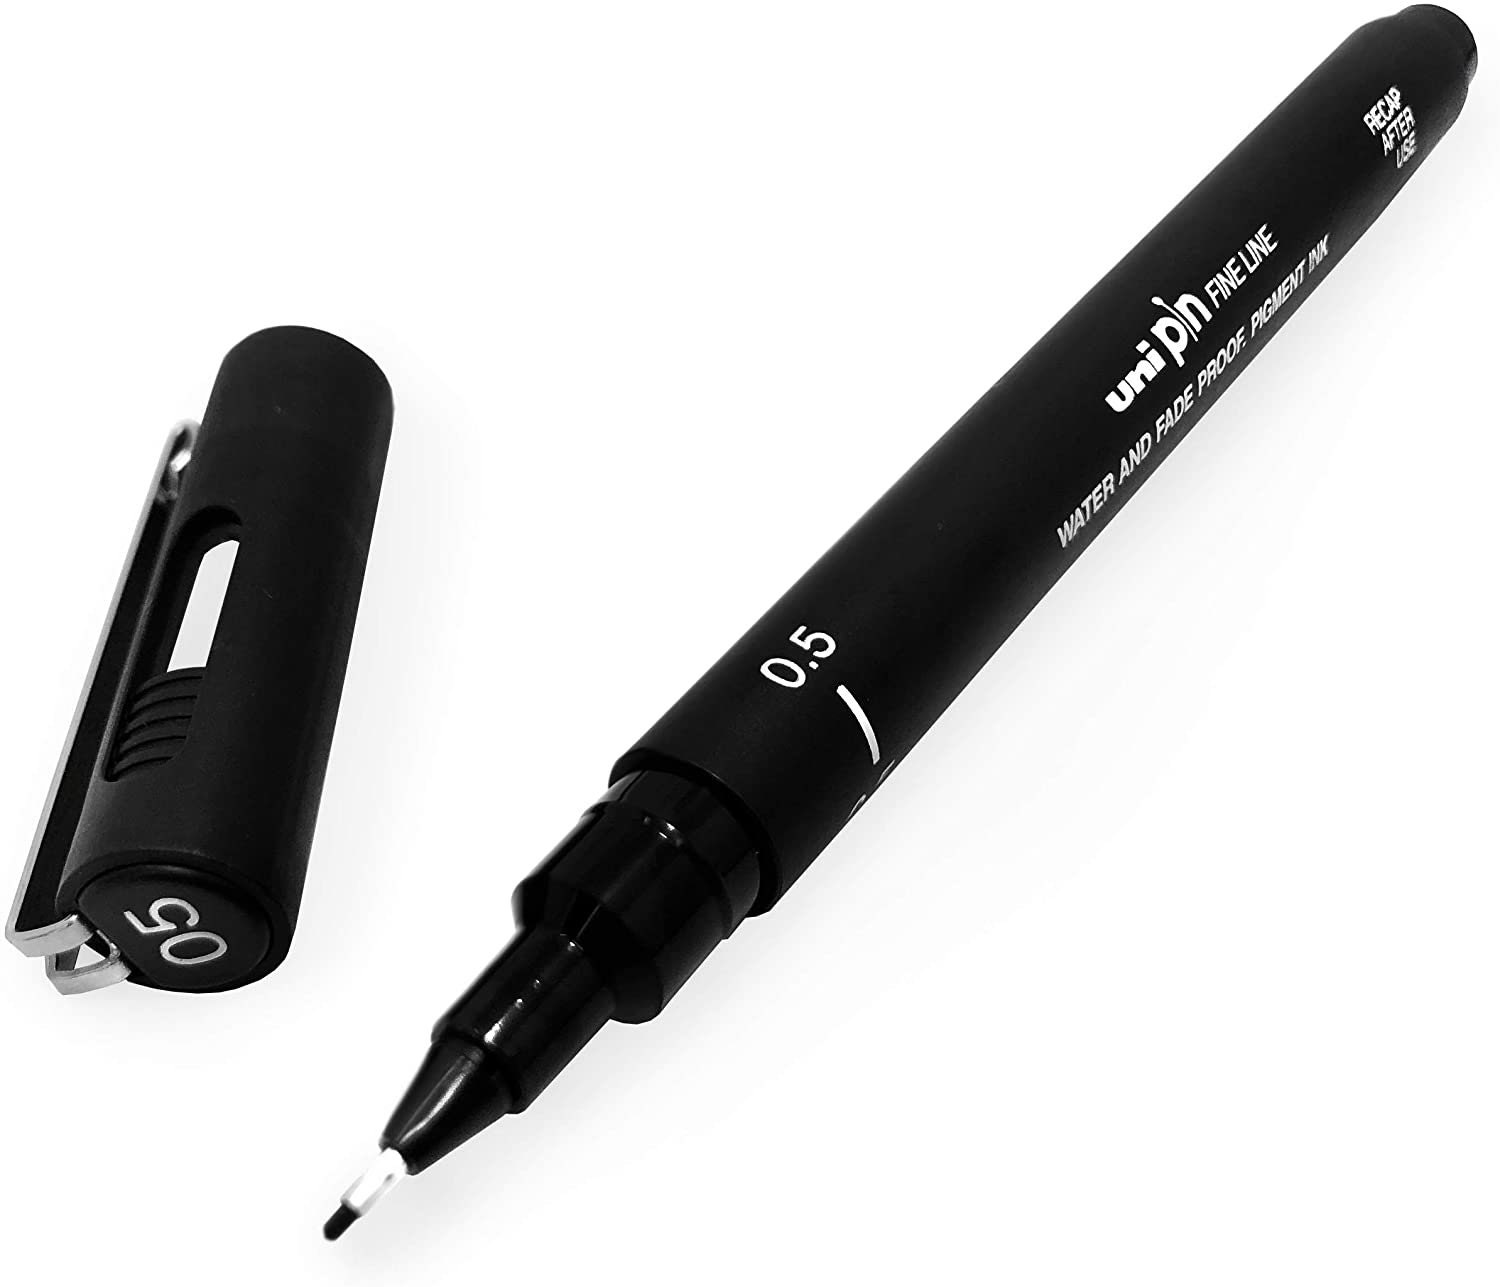 Fineliner STABILO Point 88 Coloured Fineliner Pens 0.4mm Nib Smudge Proof  Fine Line Creative Pens Scrapbooking, Bullet Journaling 